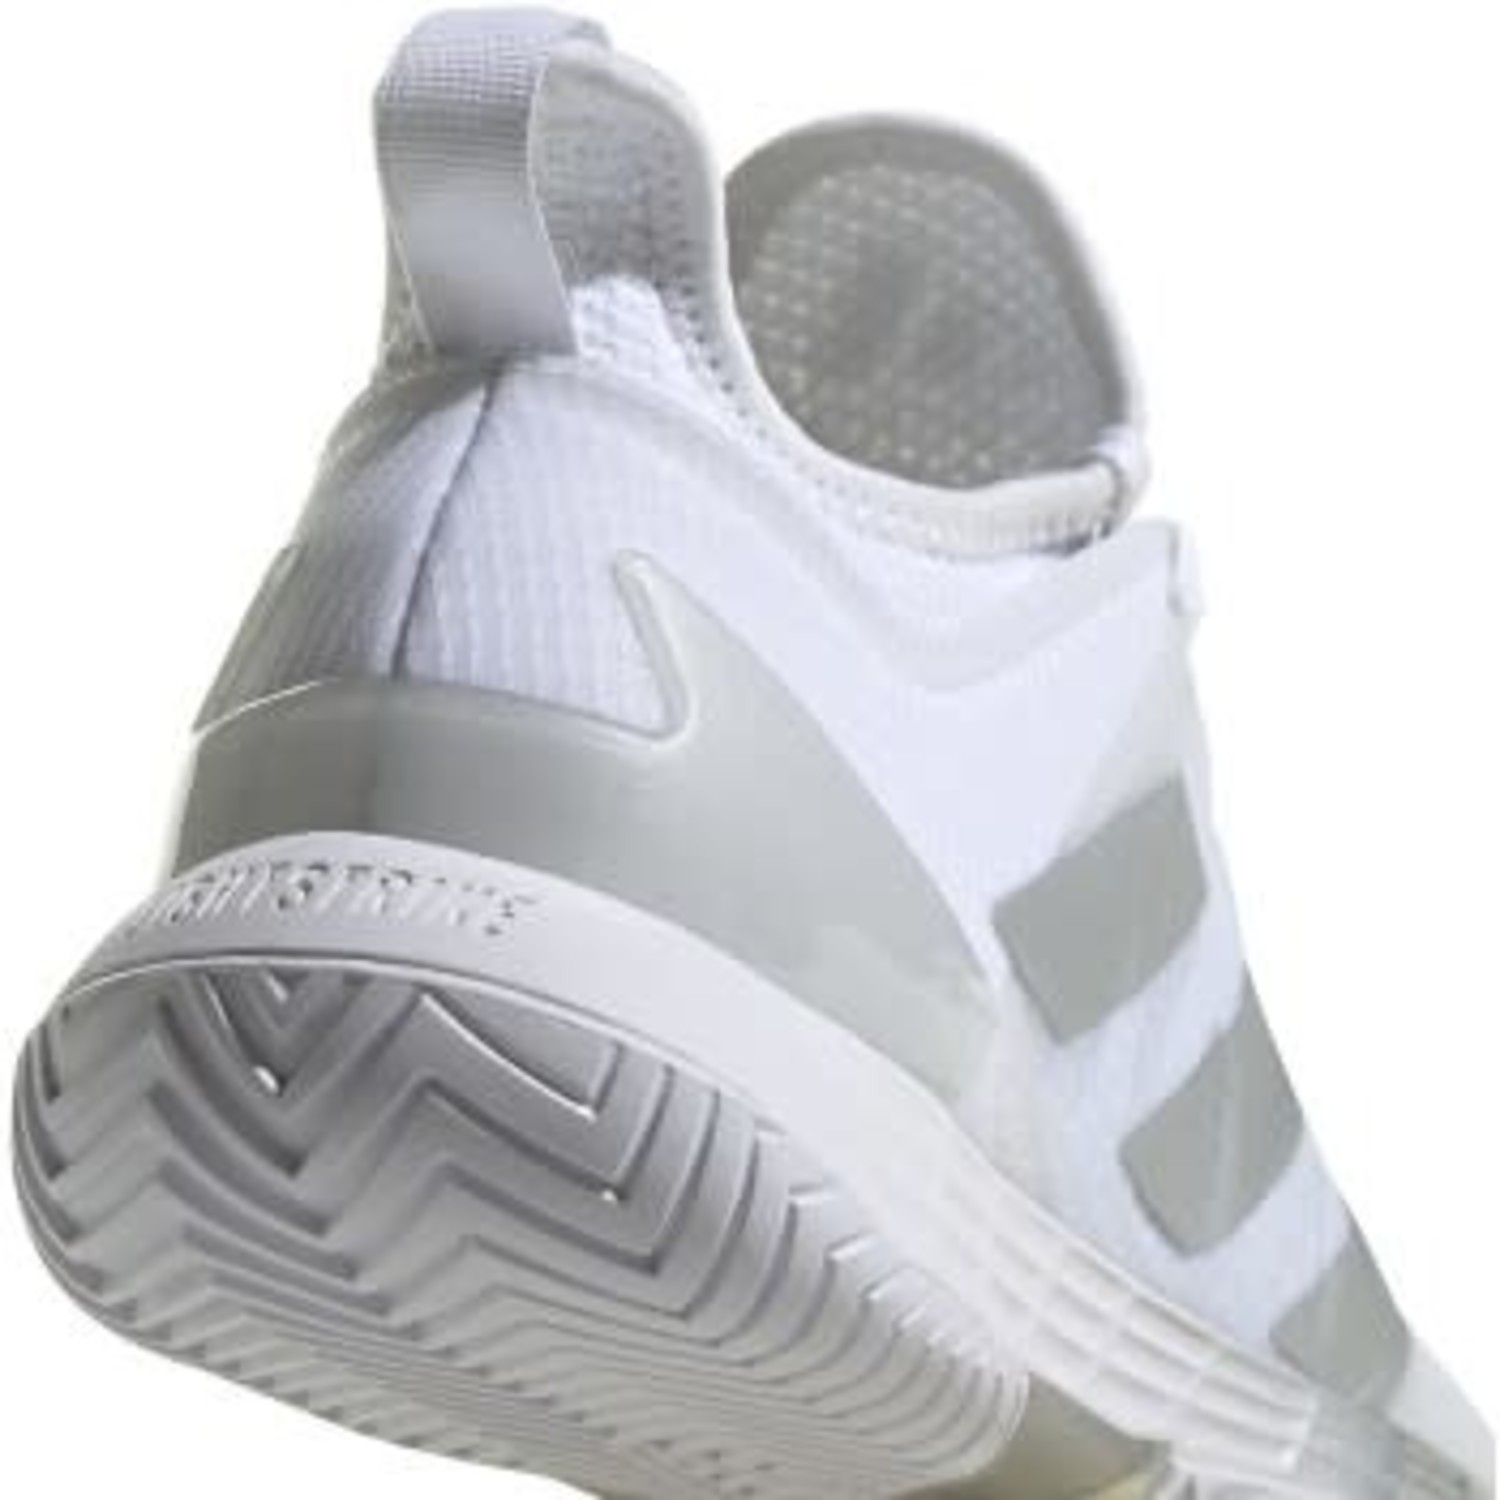 Women's Shoes - adizero Ubersonic 4 Tennis Shoes - White